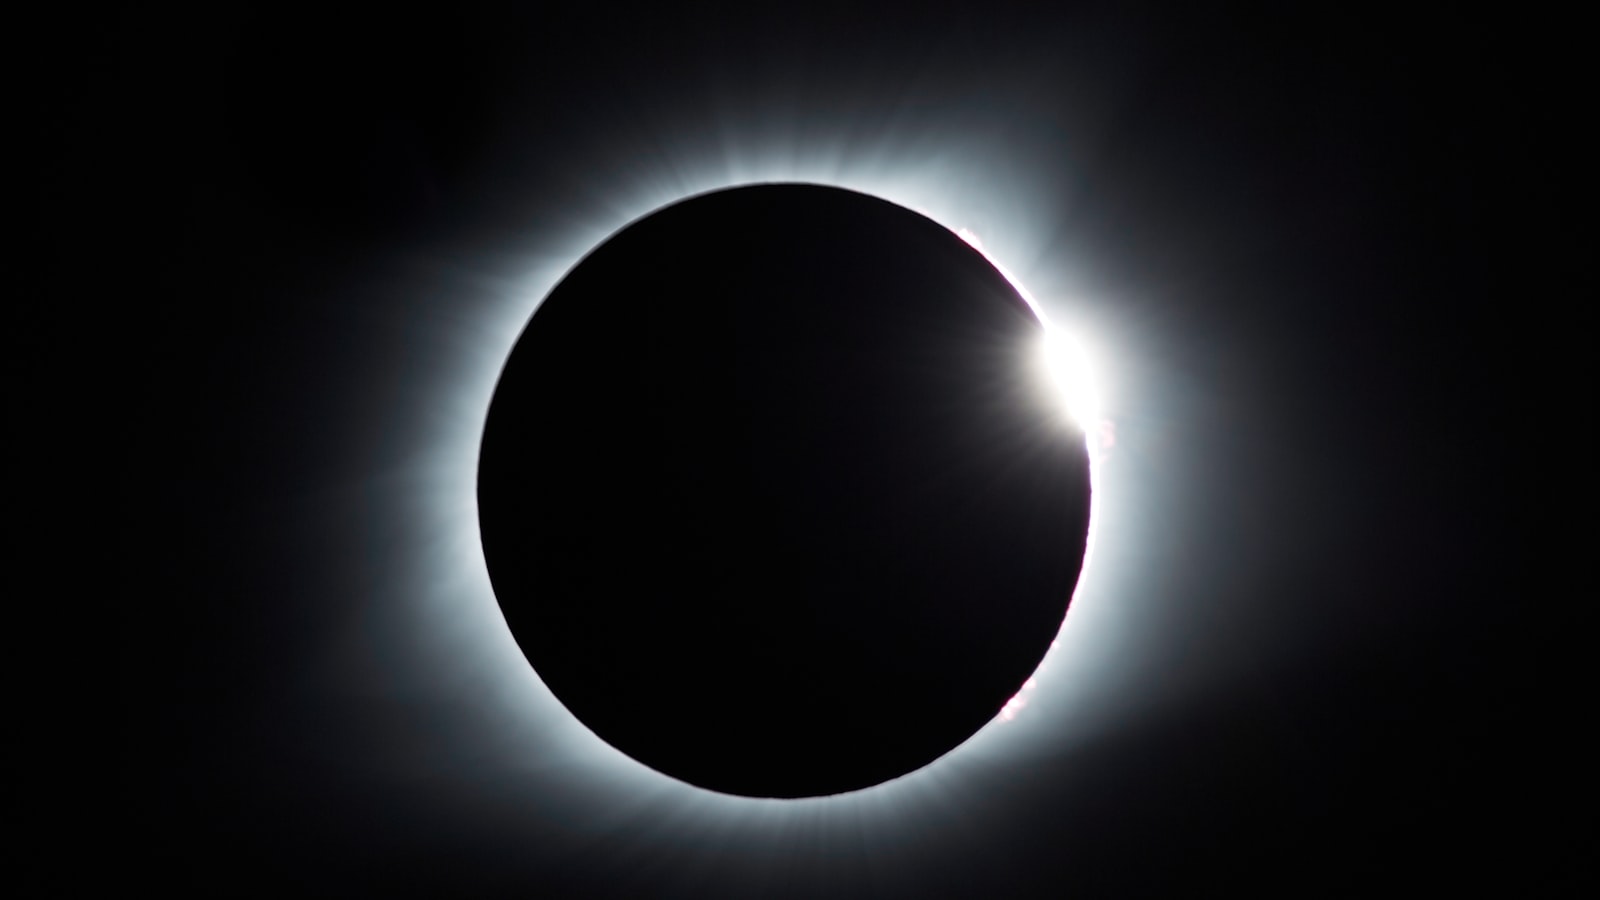 The Solar Eclipse